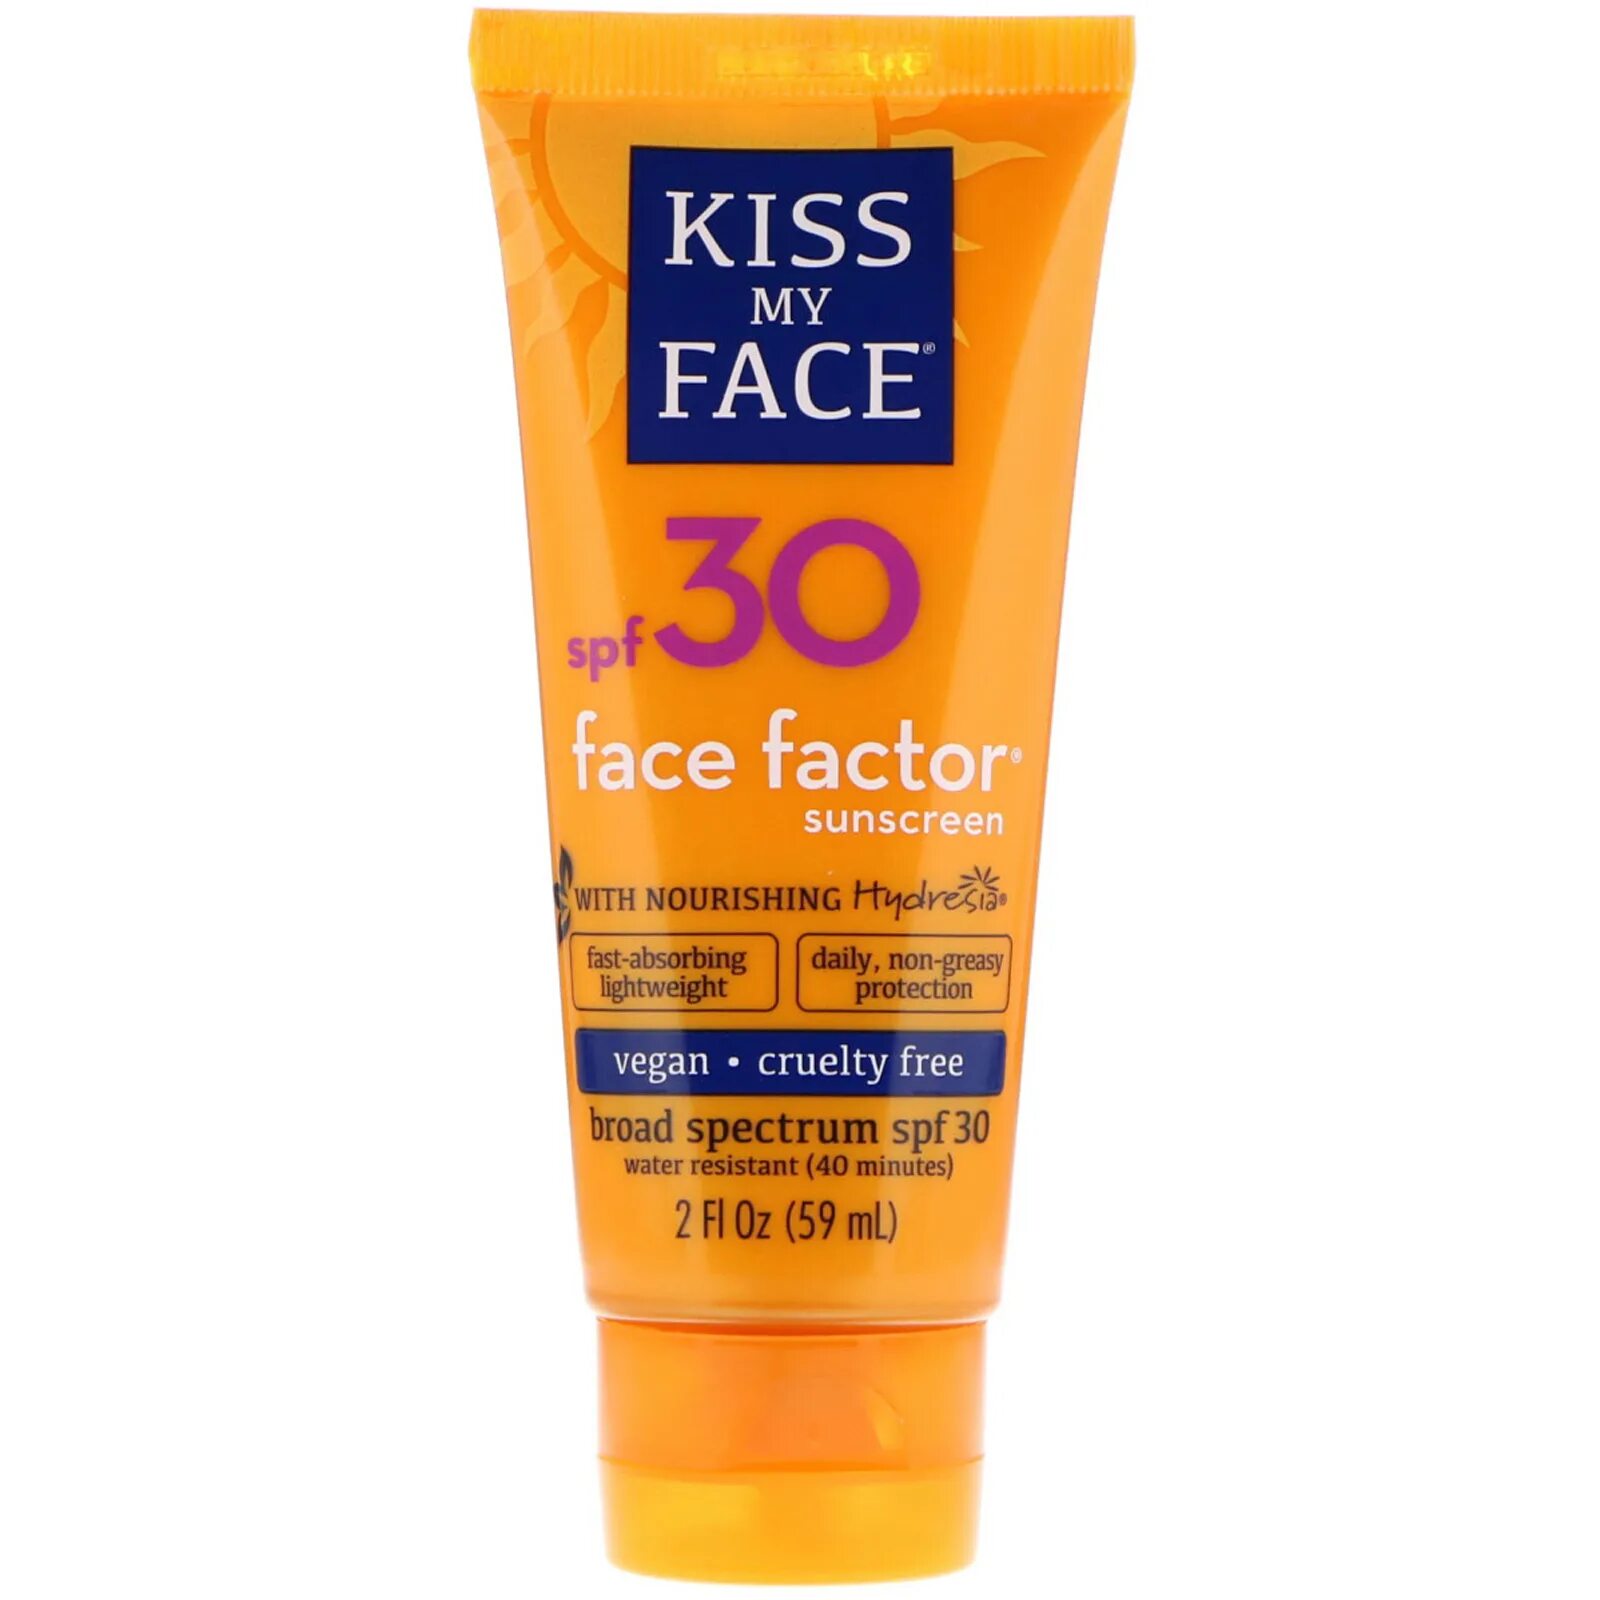 Солнцезащитные средства для лица spf 50. Sun Kiss SPF 50. Санскрин СПФ 50. Kiss my face солнцезащитный крем. Sunscreen SPF 50 для лица.